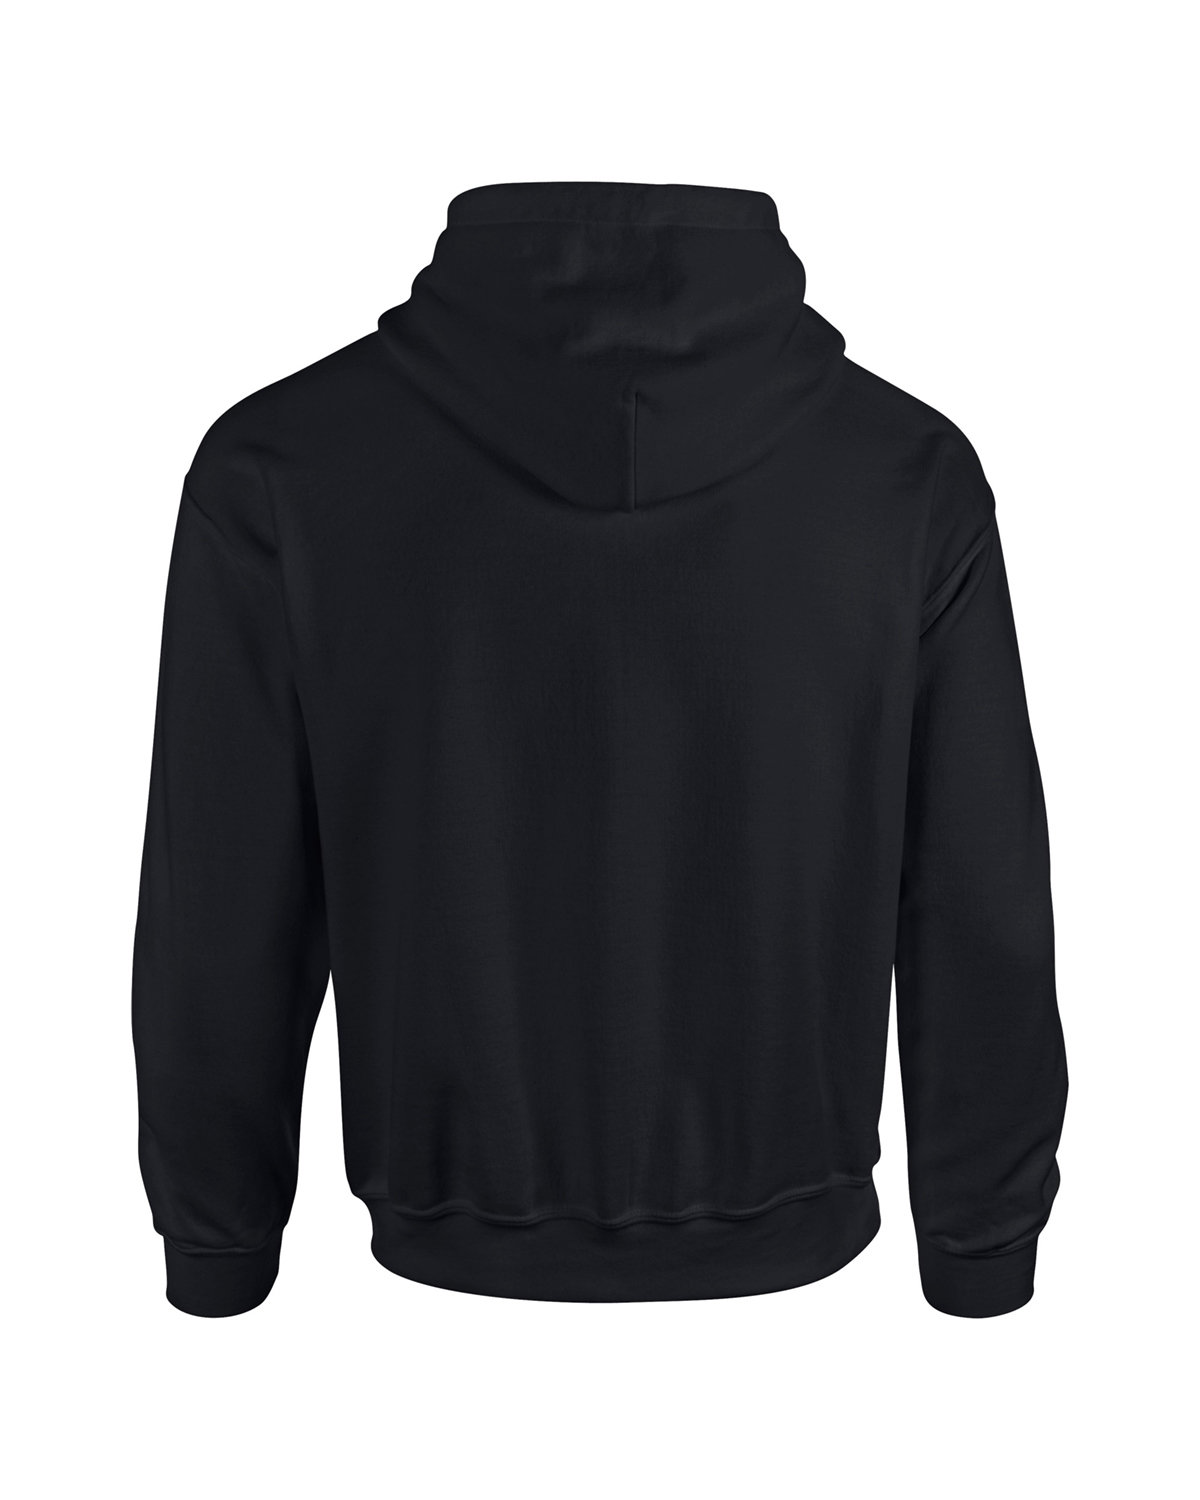 Heavy Blend Hooded Sweatshirt Canadian Custom Apparel